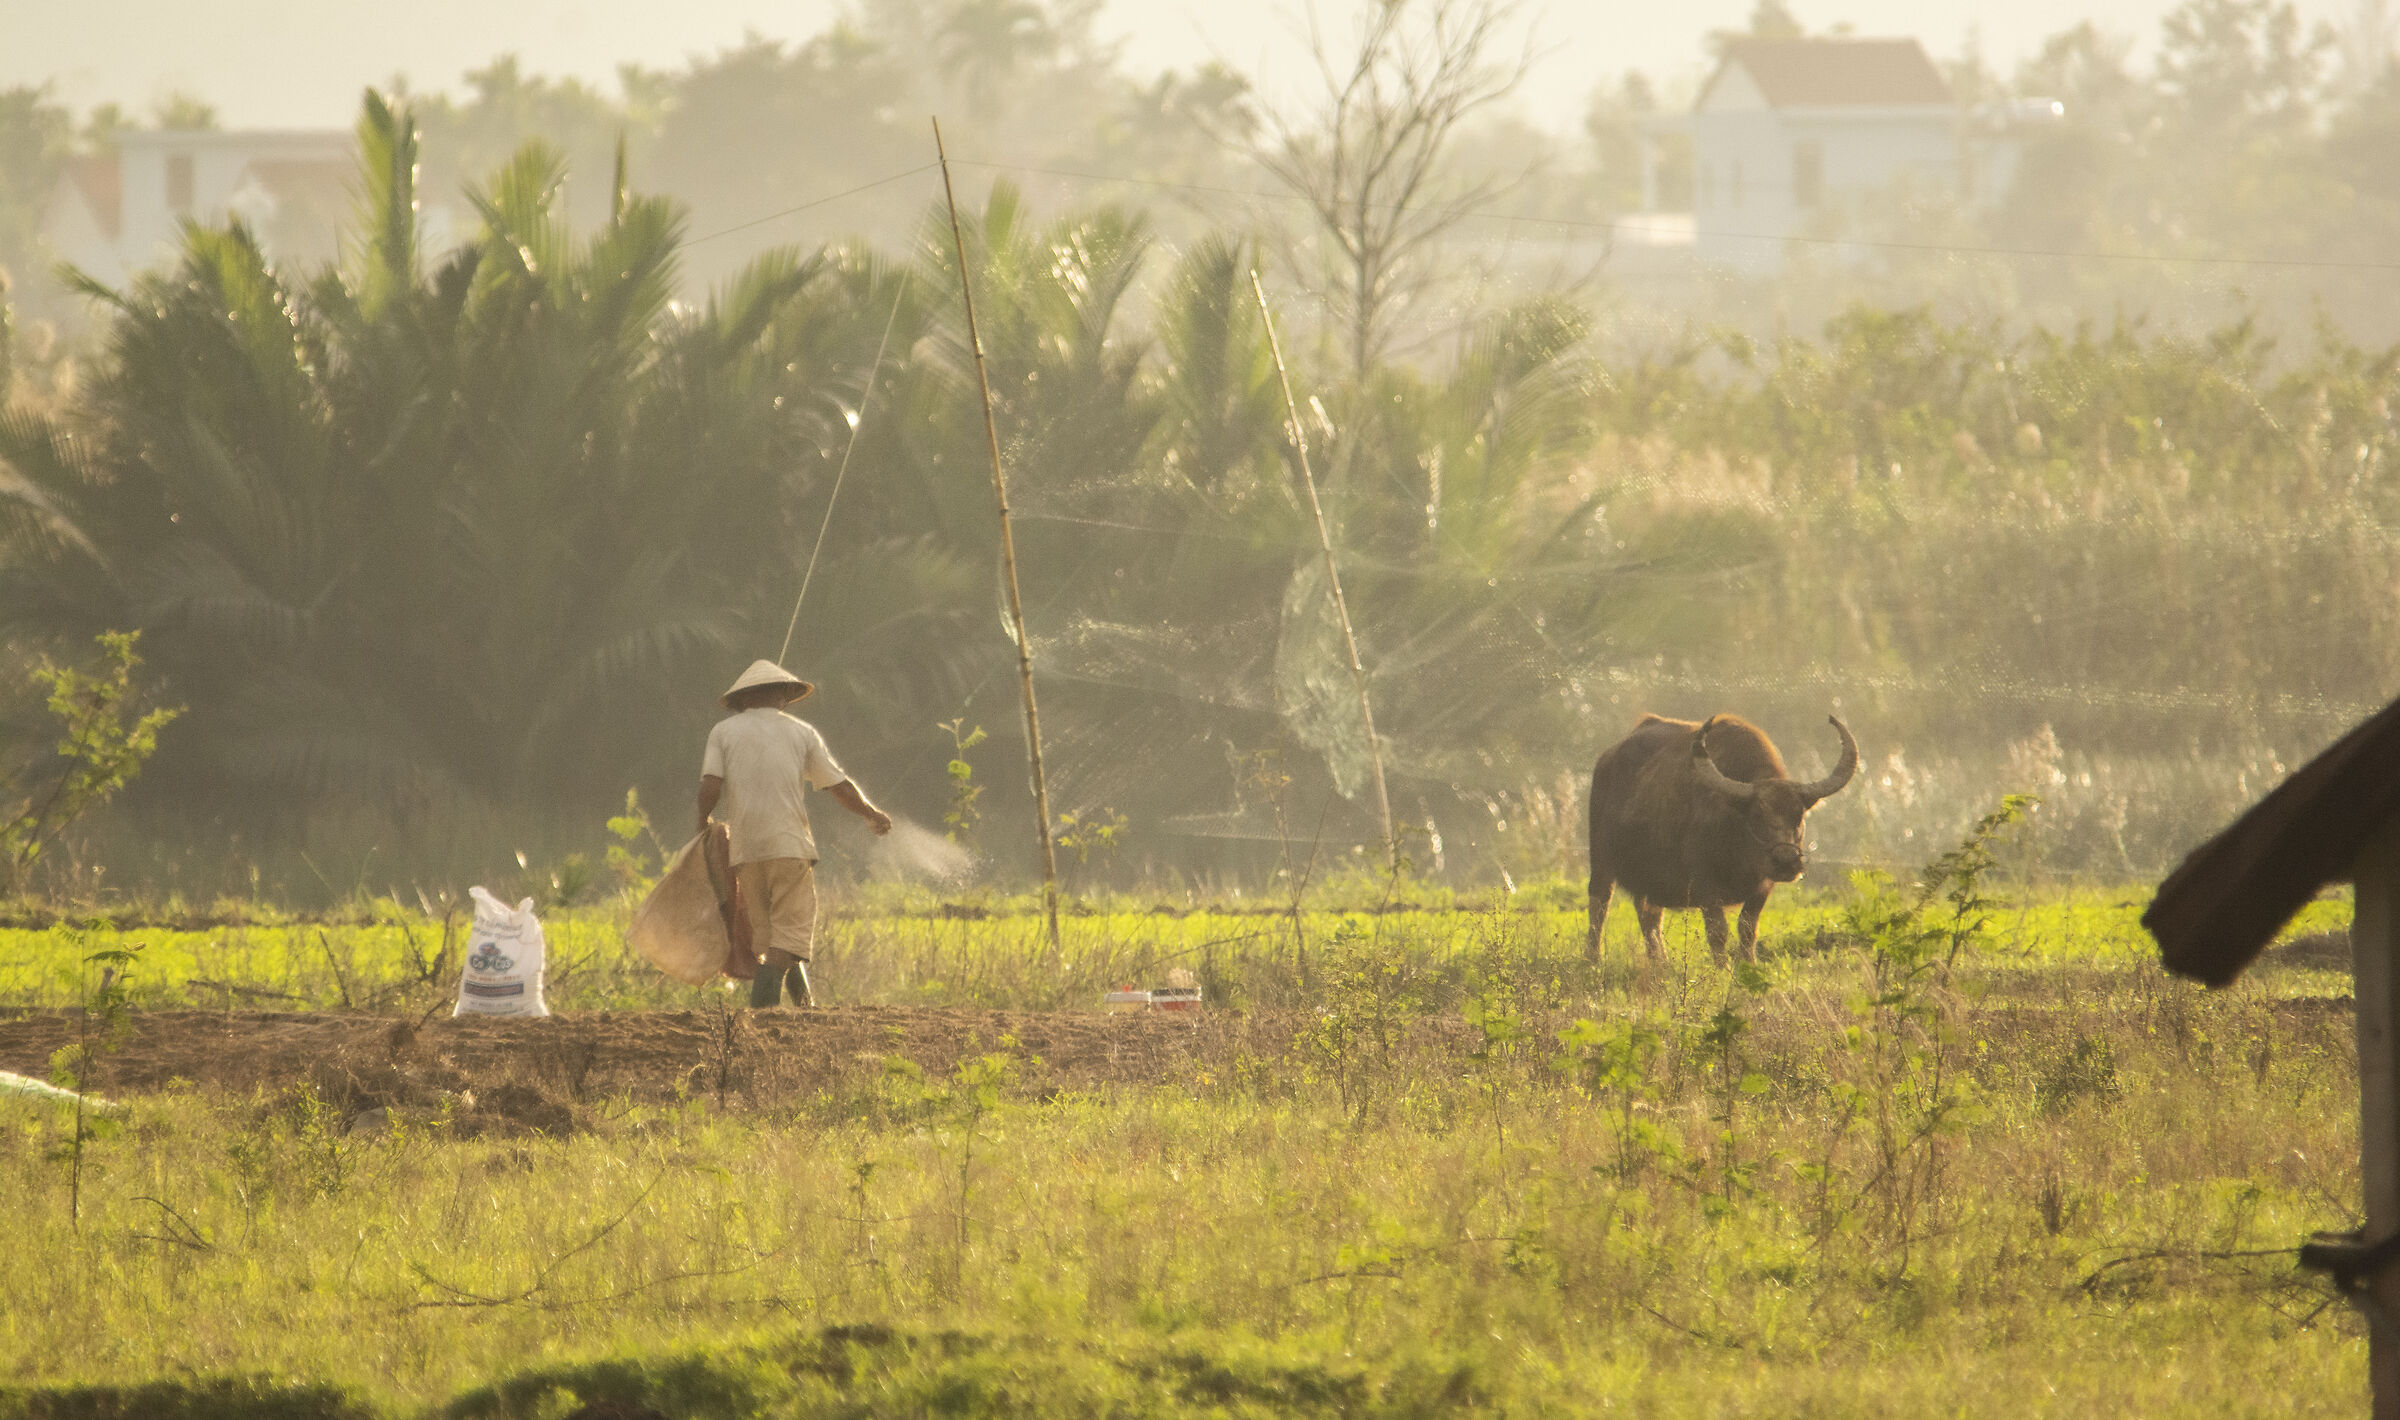 Countryside life - Vietnam...